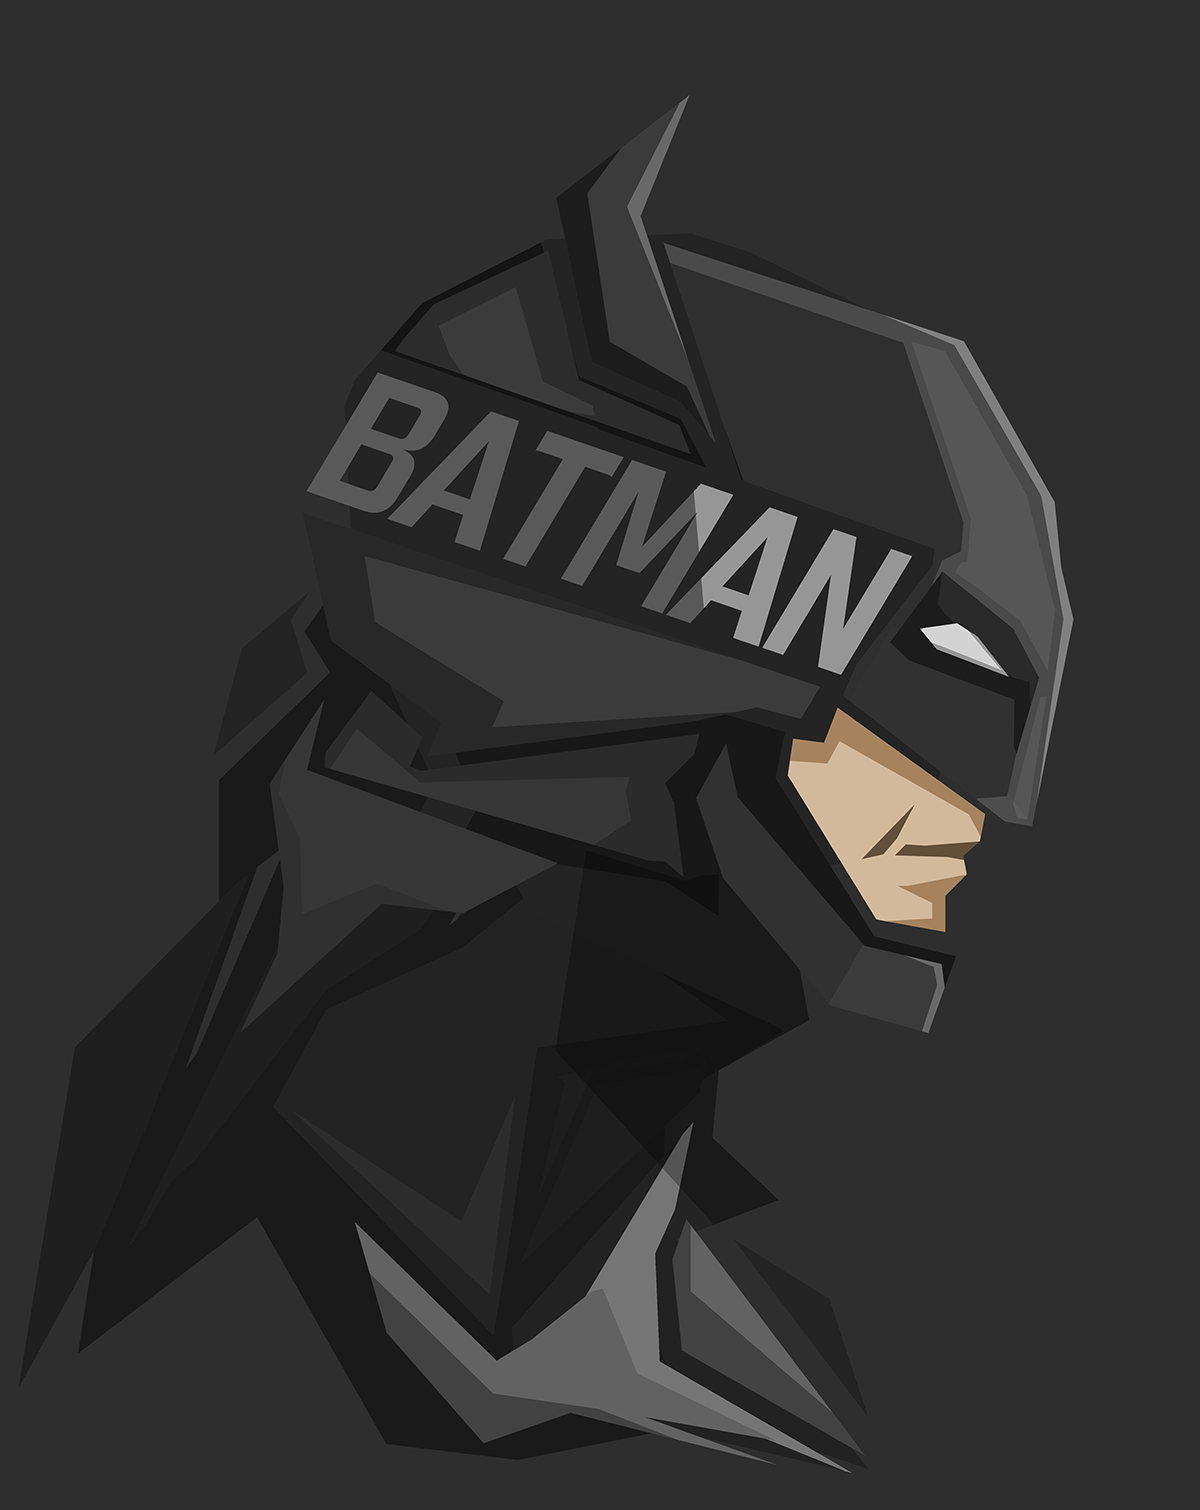 General 1200x1510 Bosslogic Batman artwork dark gray profile superhero